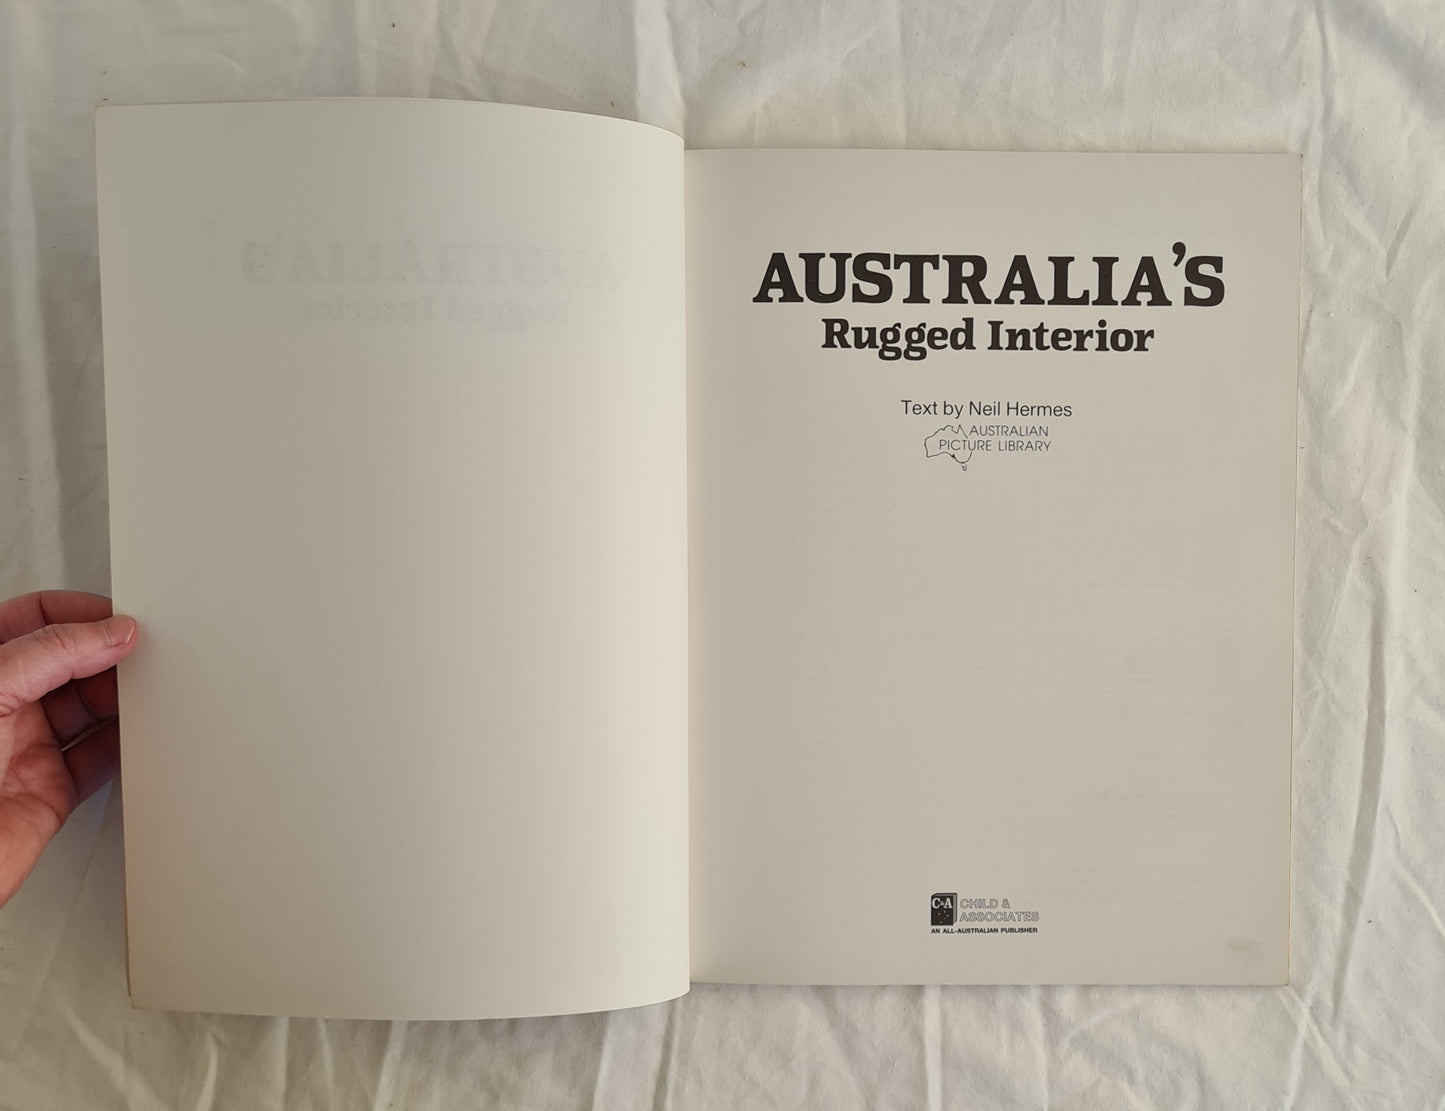 Australia’s Rugged Interior by Neil Hermes